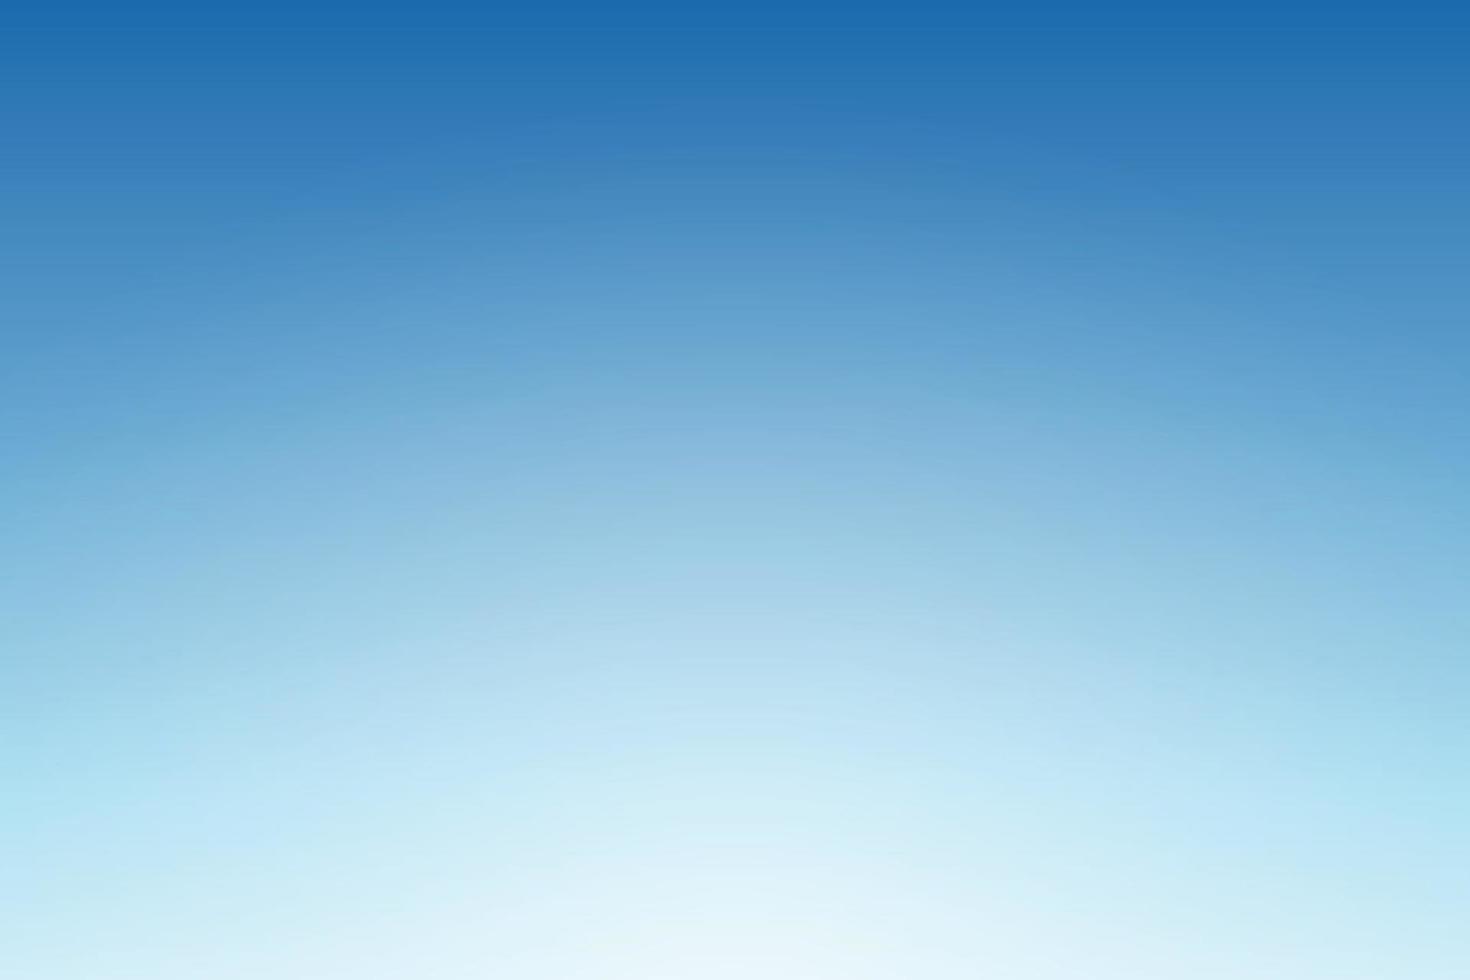 Spanish Sky Blue Solid Color Background Image  Free Image Generator